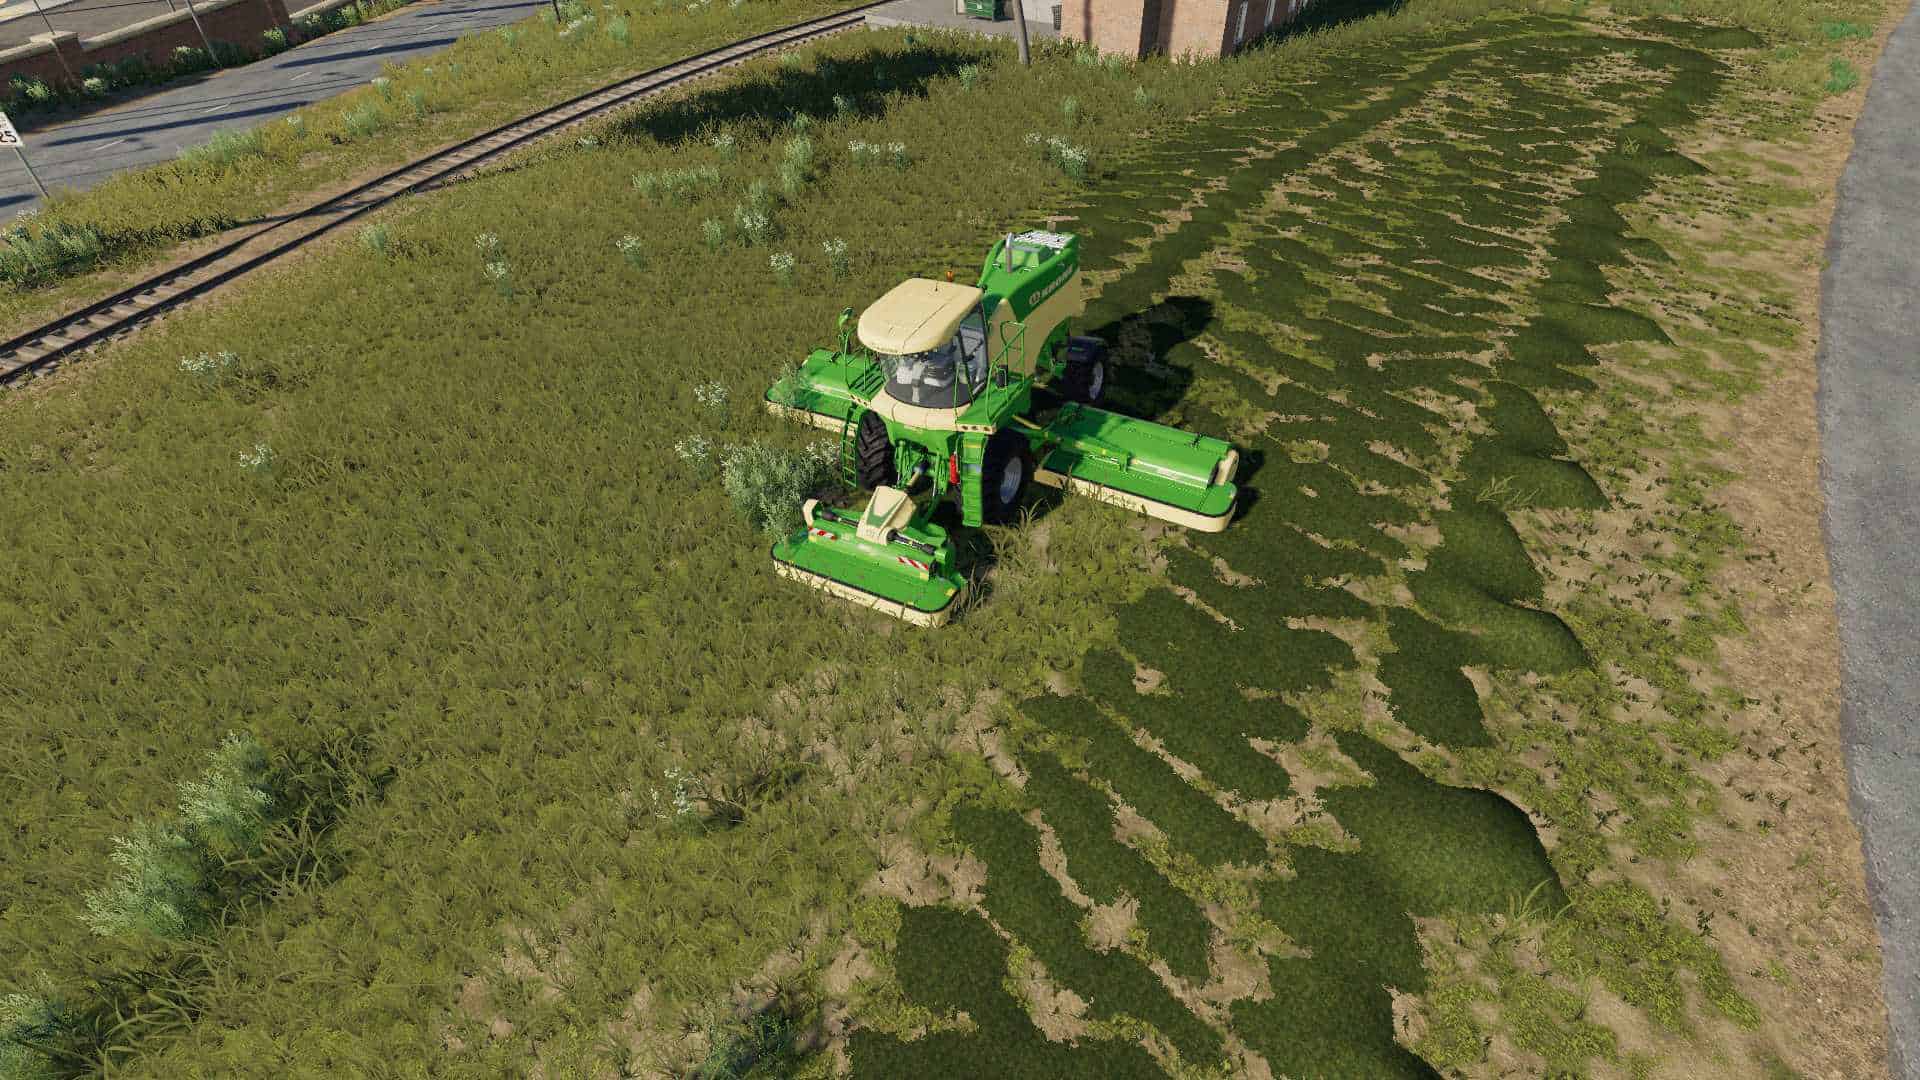 FS19 Real Mower v1.0.0 (6) - Farming simulator 19 / 17 / 15 Mod.